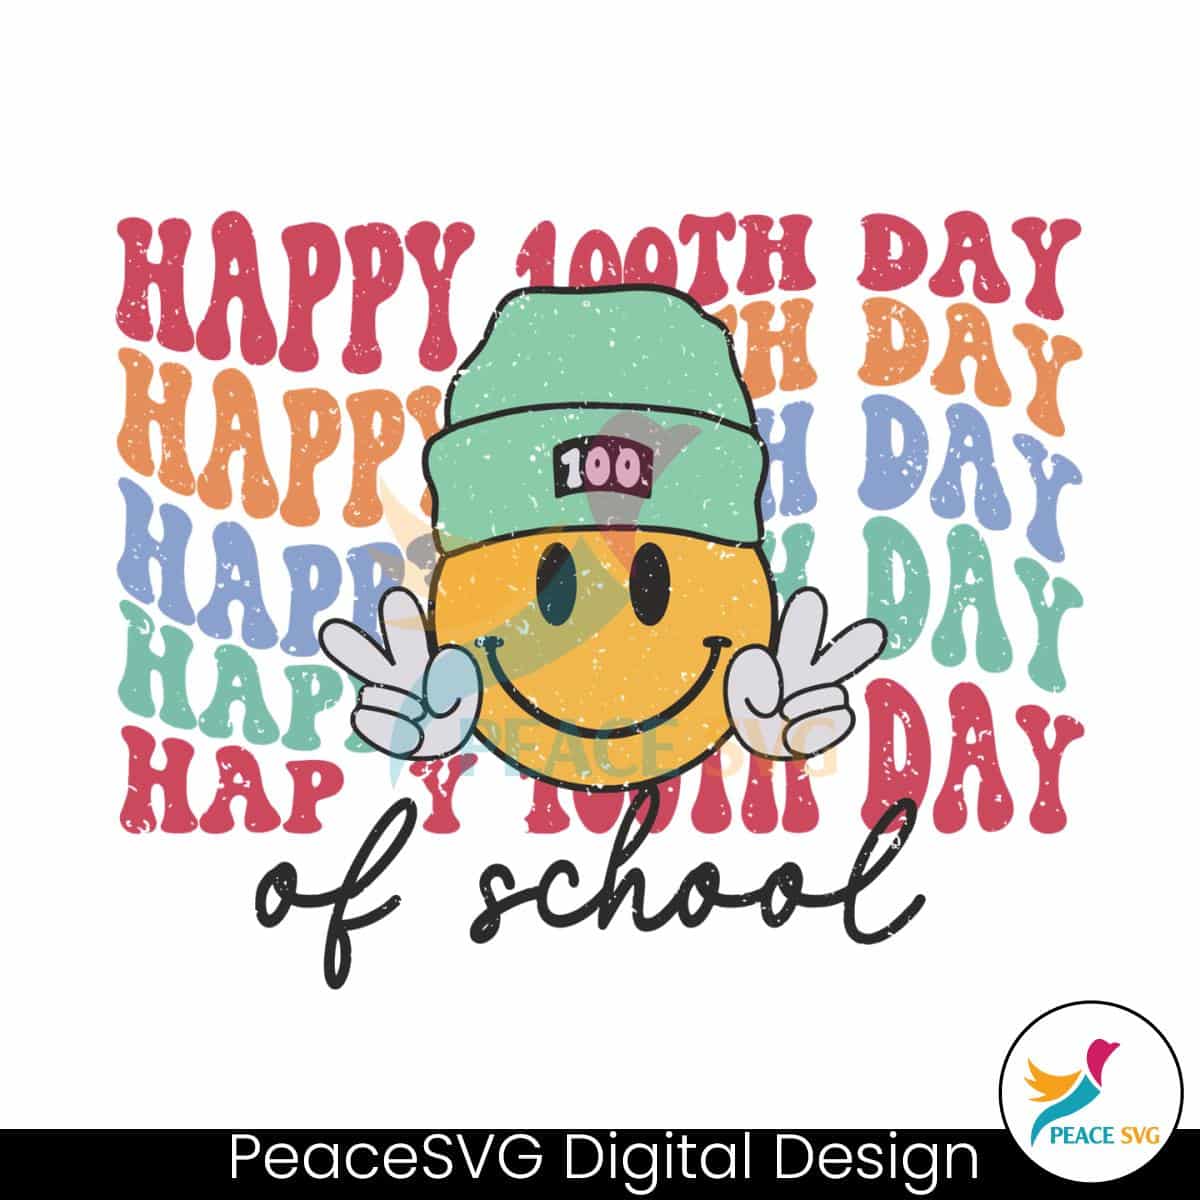 happy-100th-day-of-school-celebration-svg-peacesvg